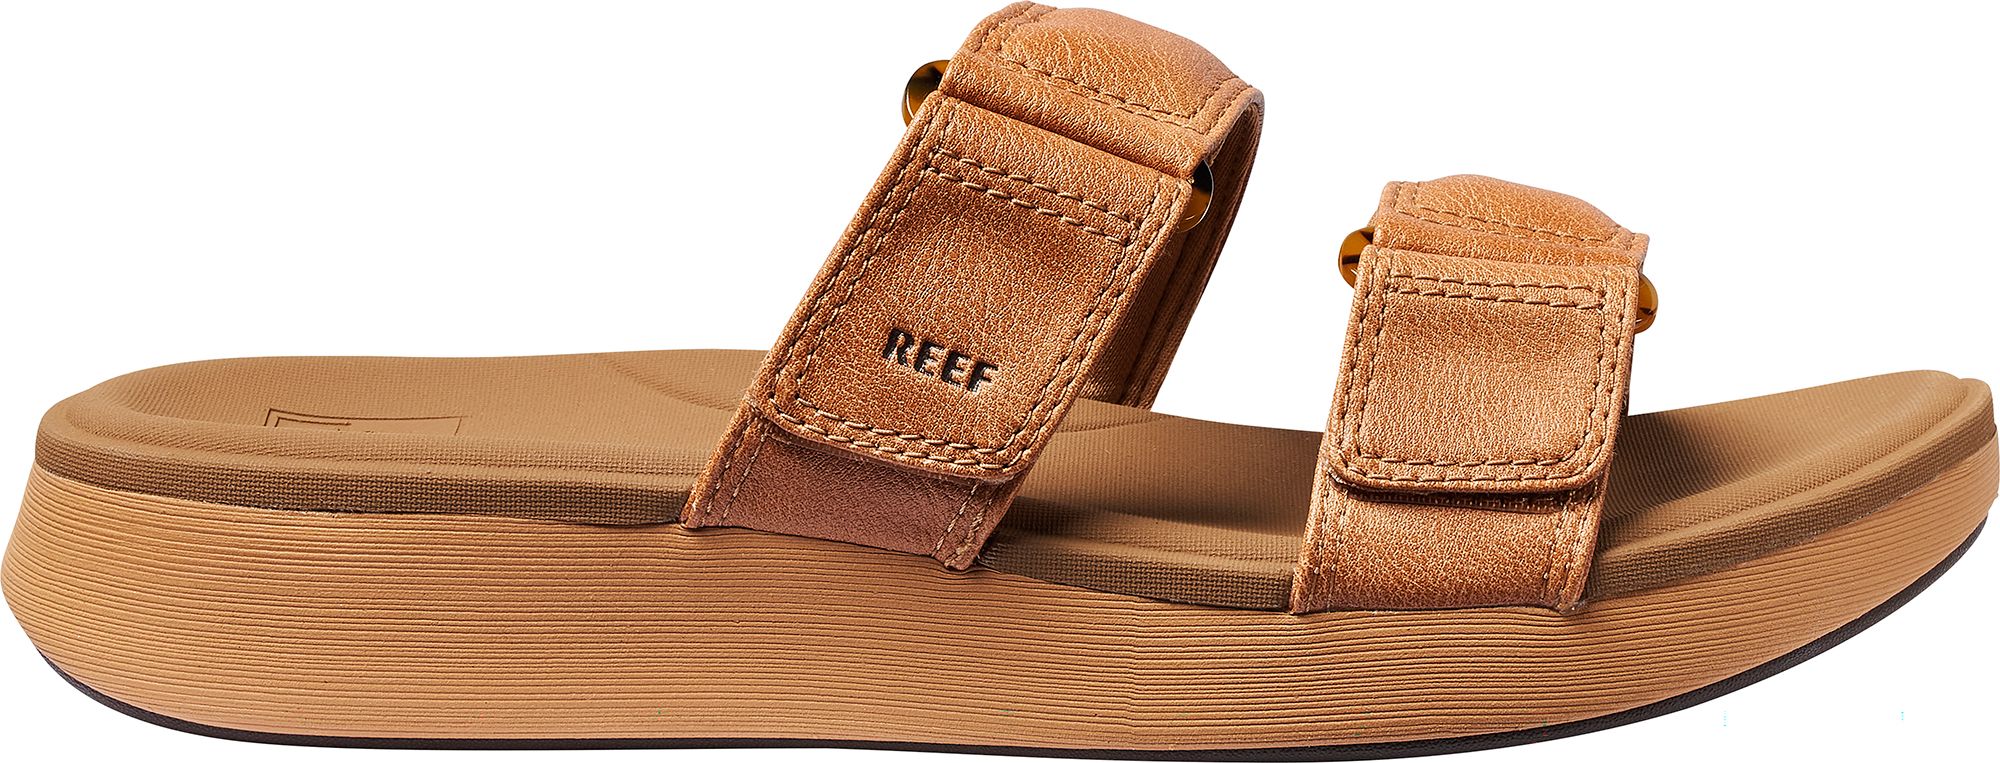 Reef Women's Cushion Cloud Roa Sandals